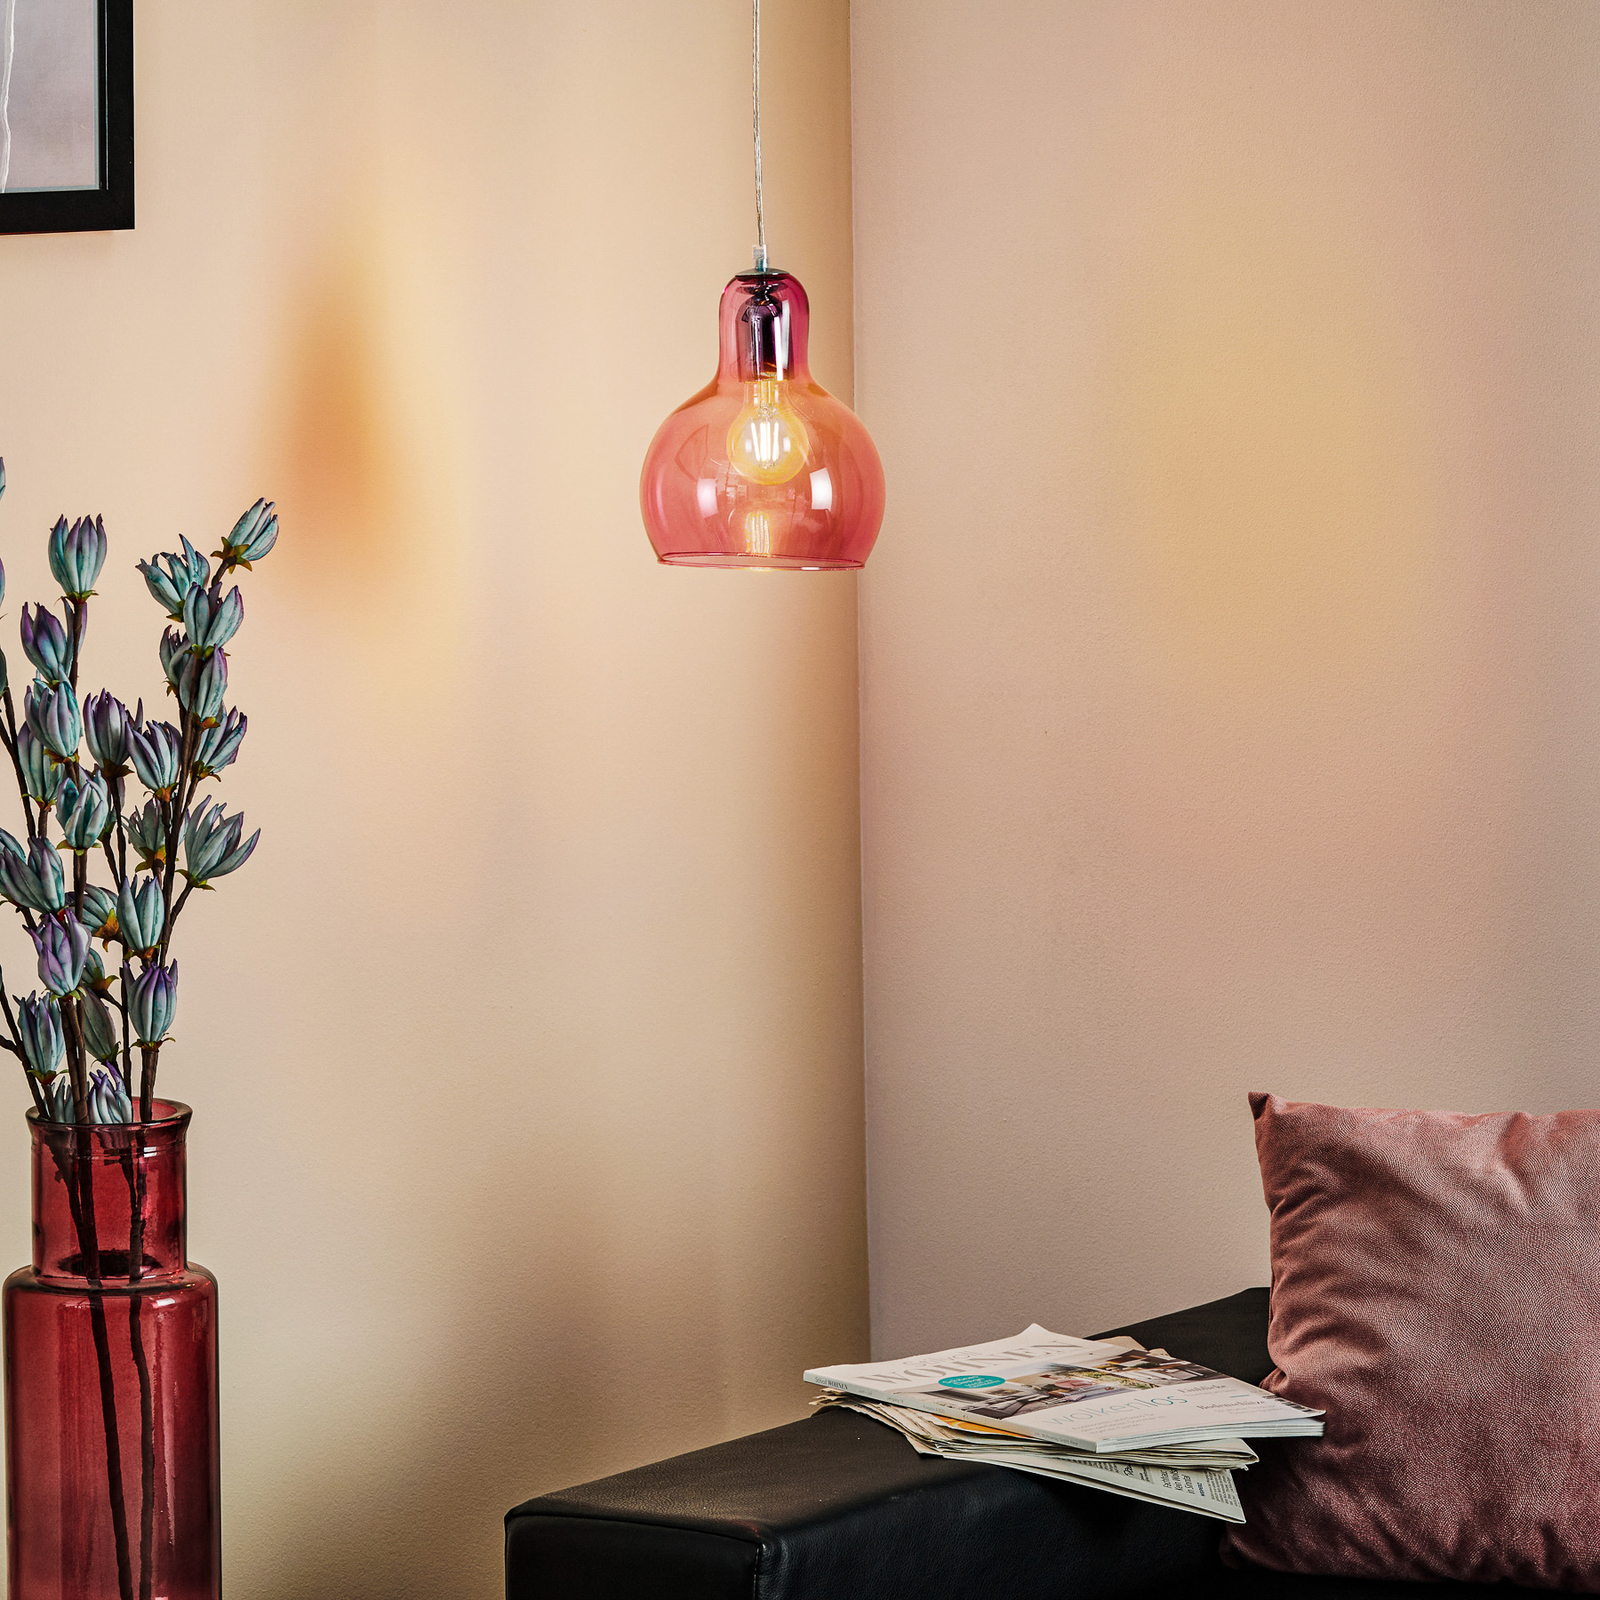 Hanglamp Mango, roze-transparant/zilver